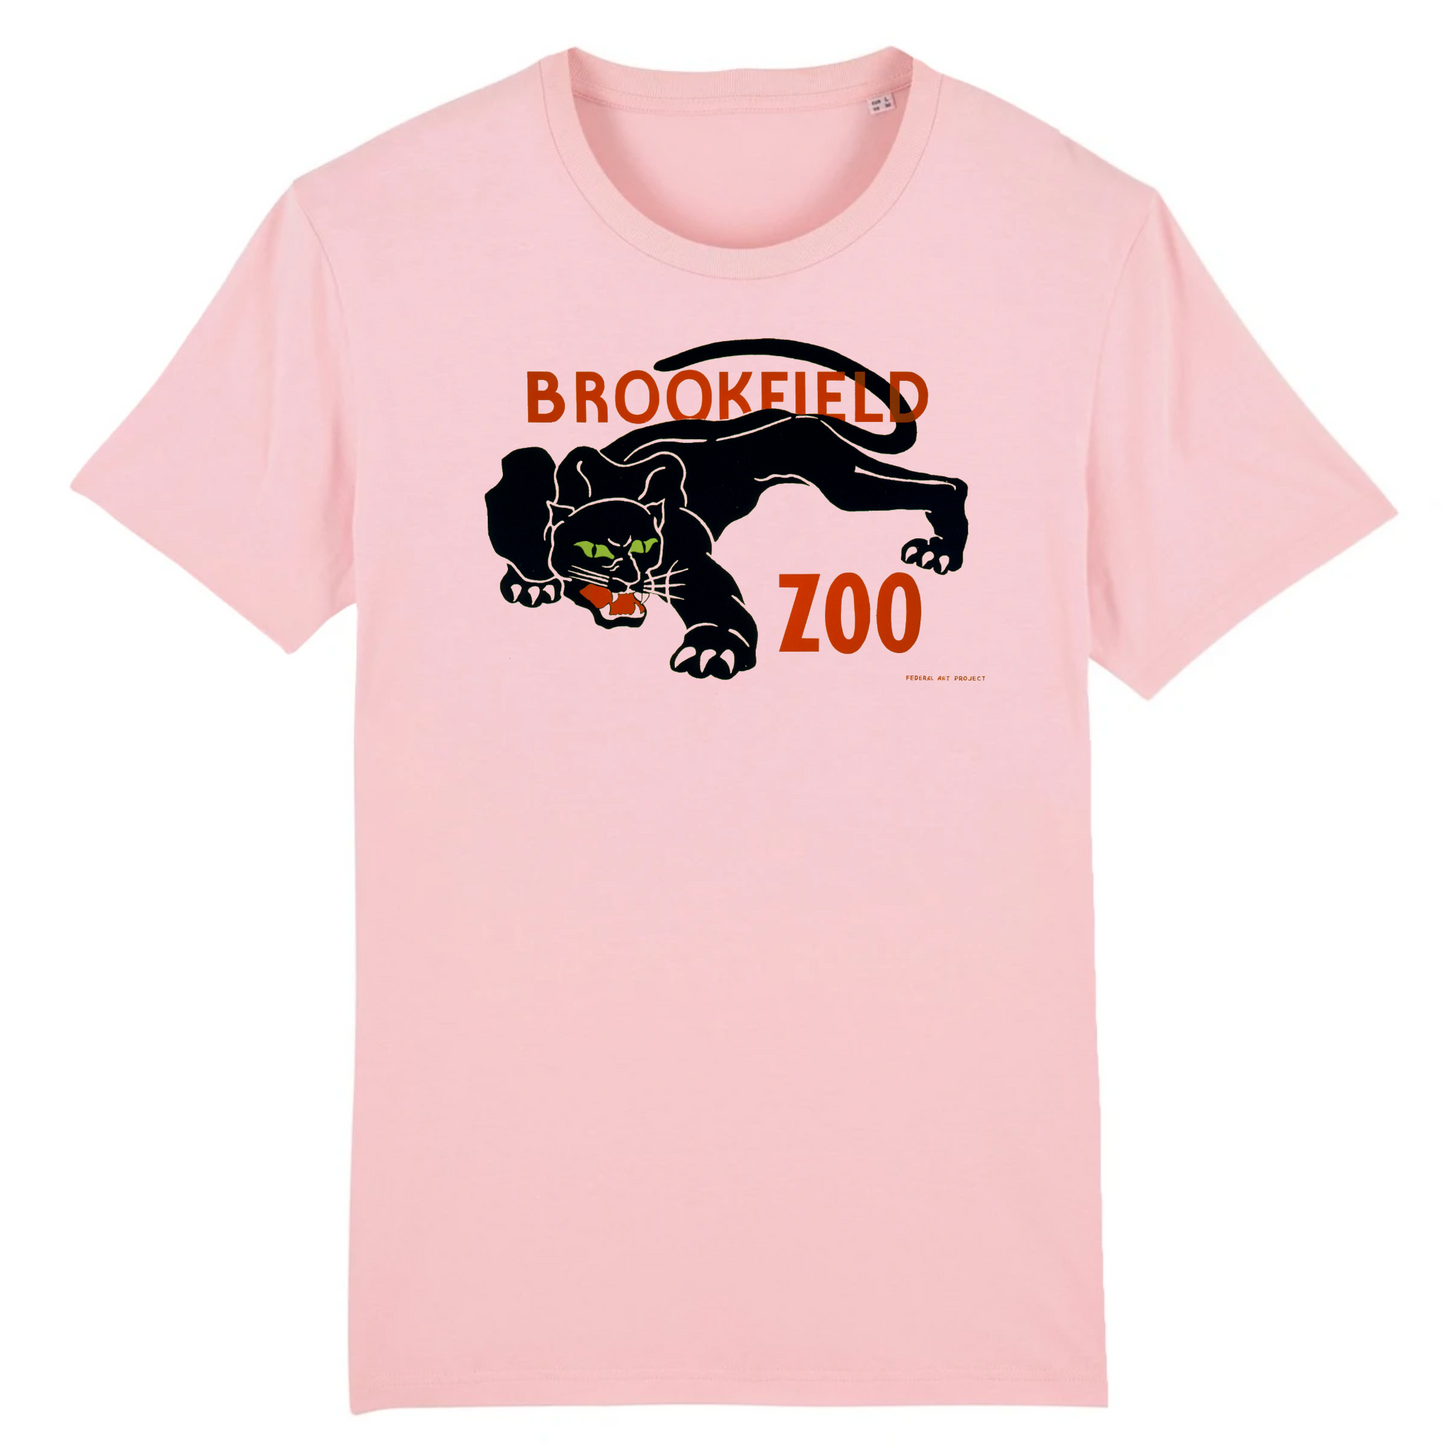 Brookfield Zoo, Chicago, 1936 - Organic Cotton T-Shirt